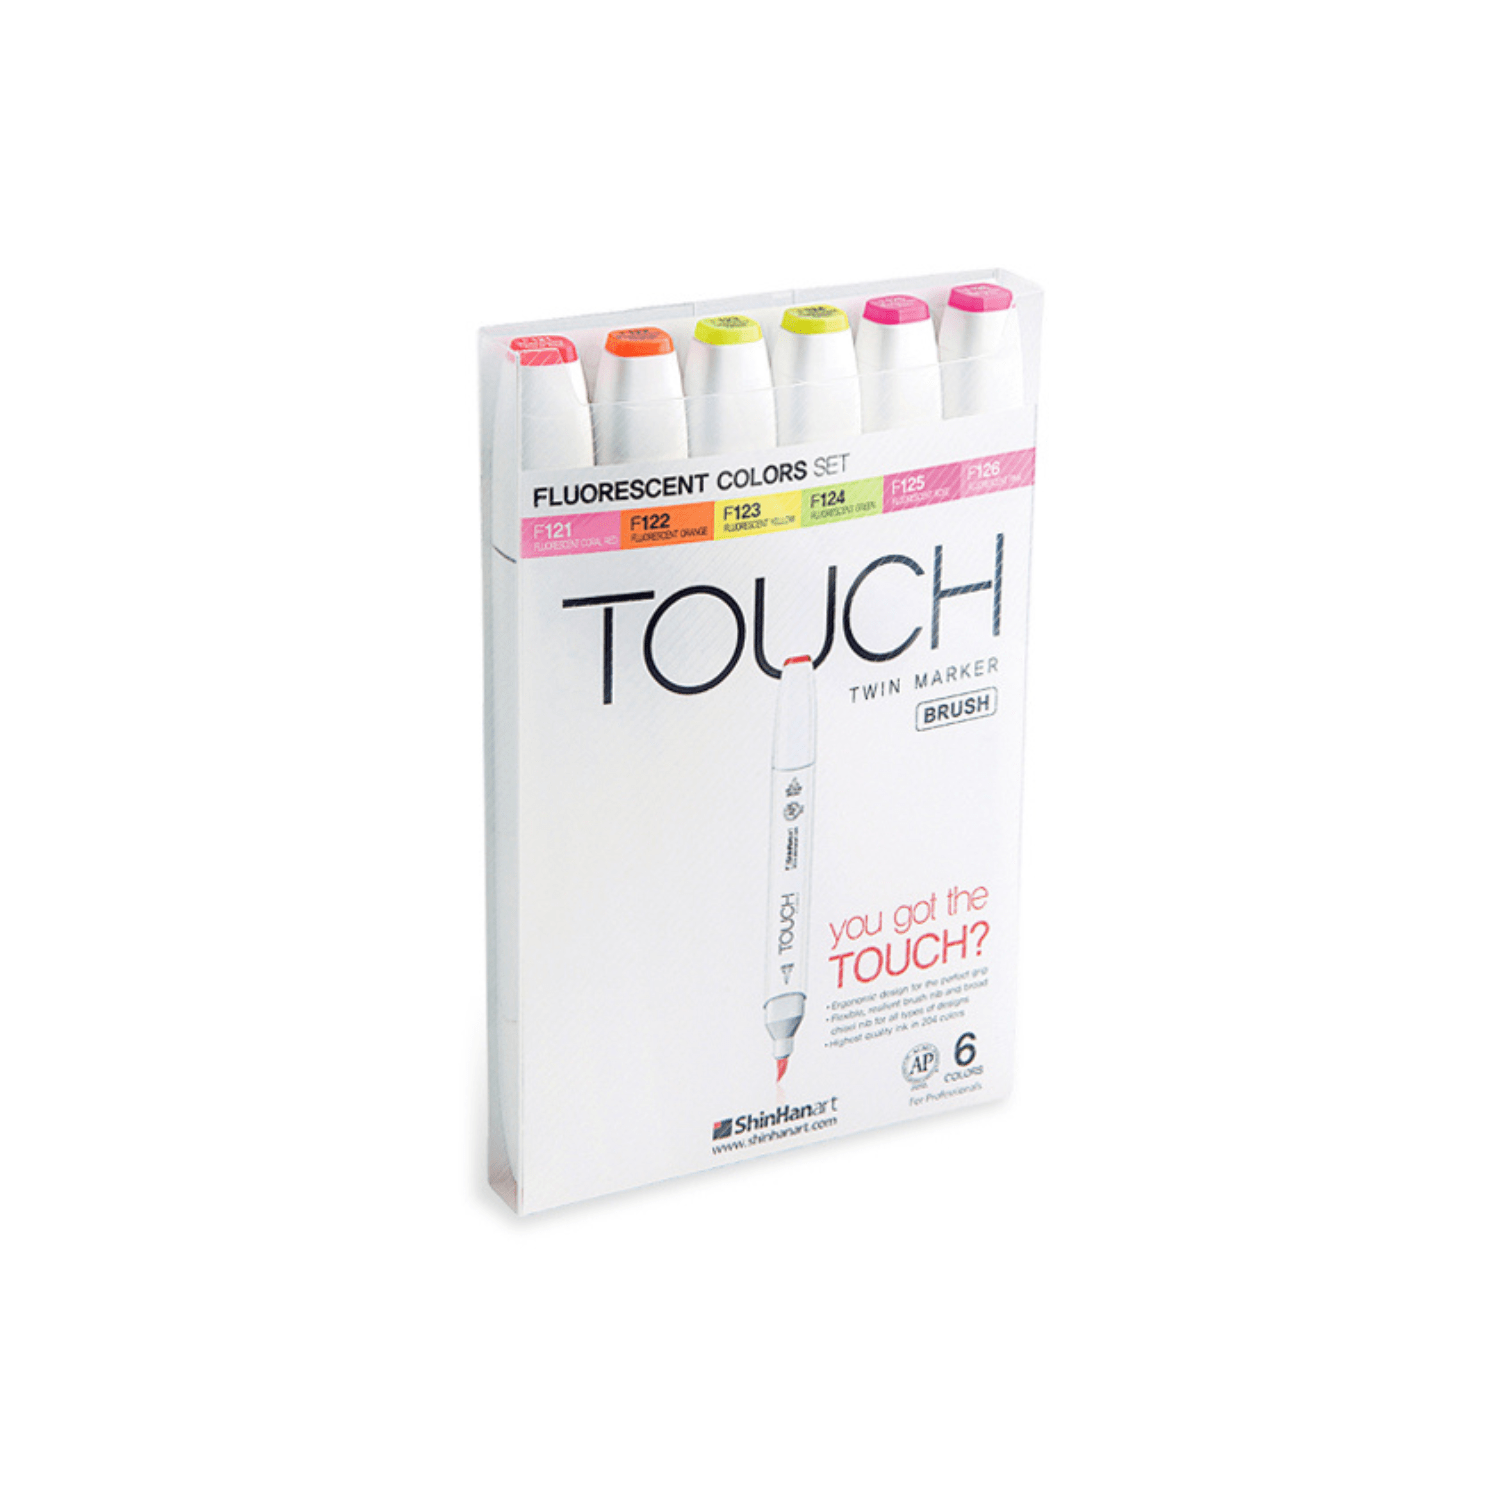 ShinHanart Touch Twin Brush Markers 6 stk. Fluorescent Colors sæt